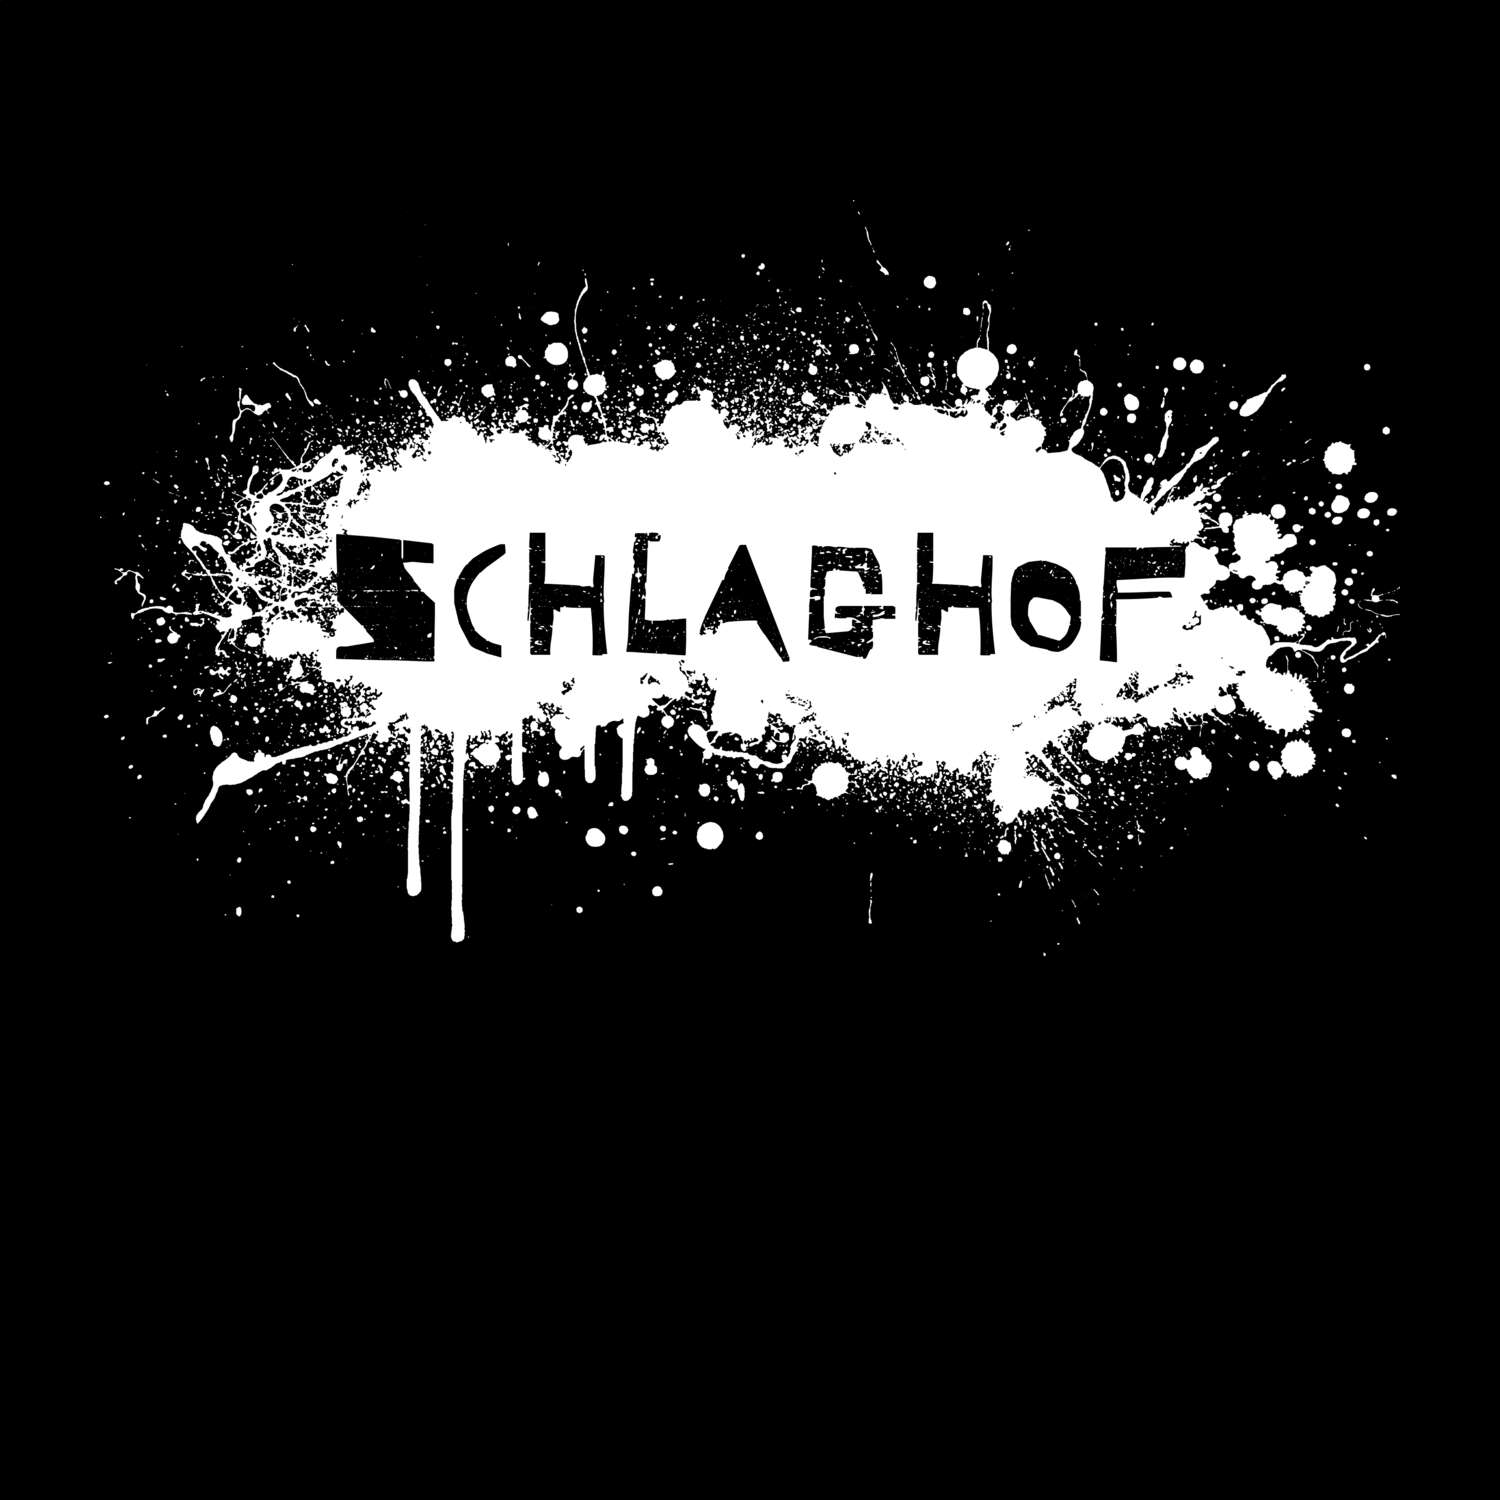 Schlaghof T-Shirt »Paint Splash Punk«